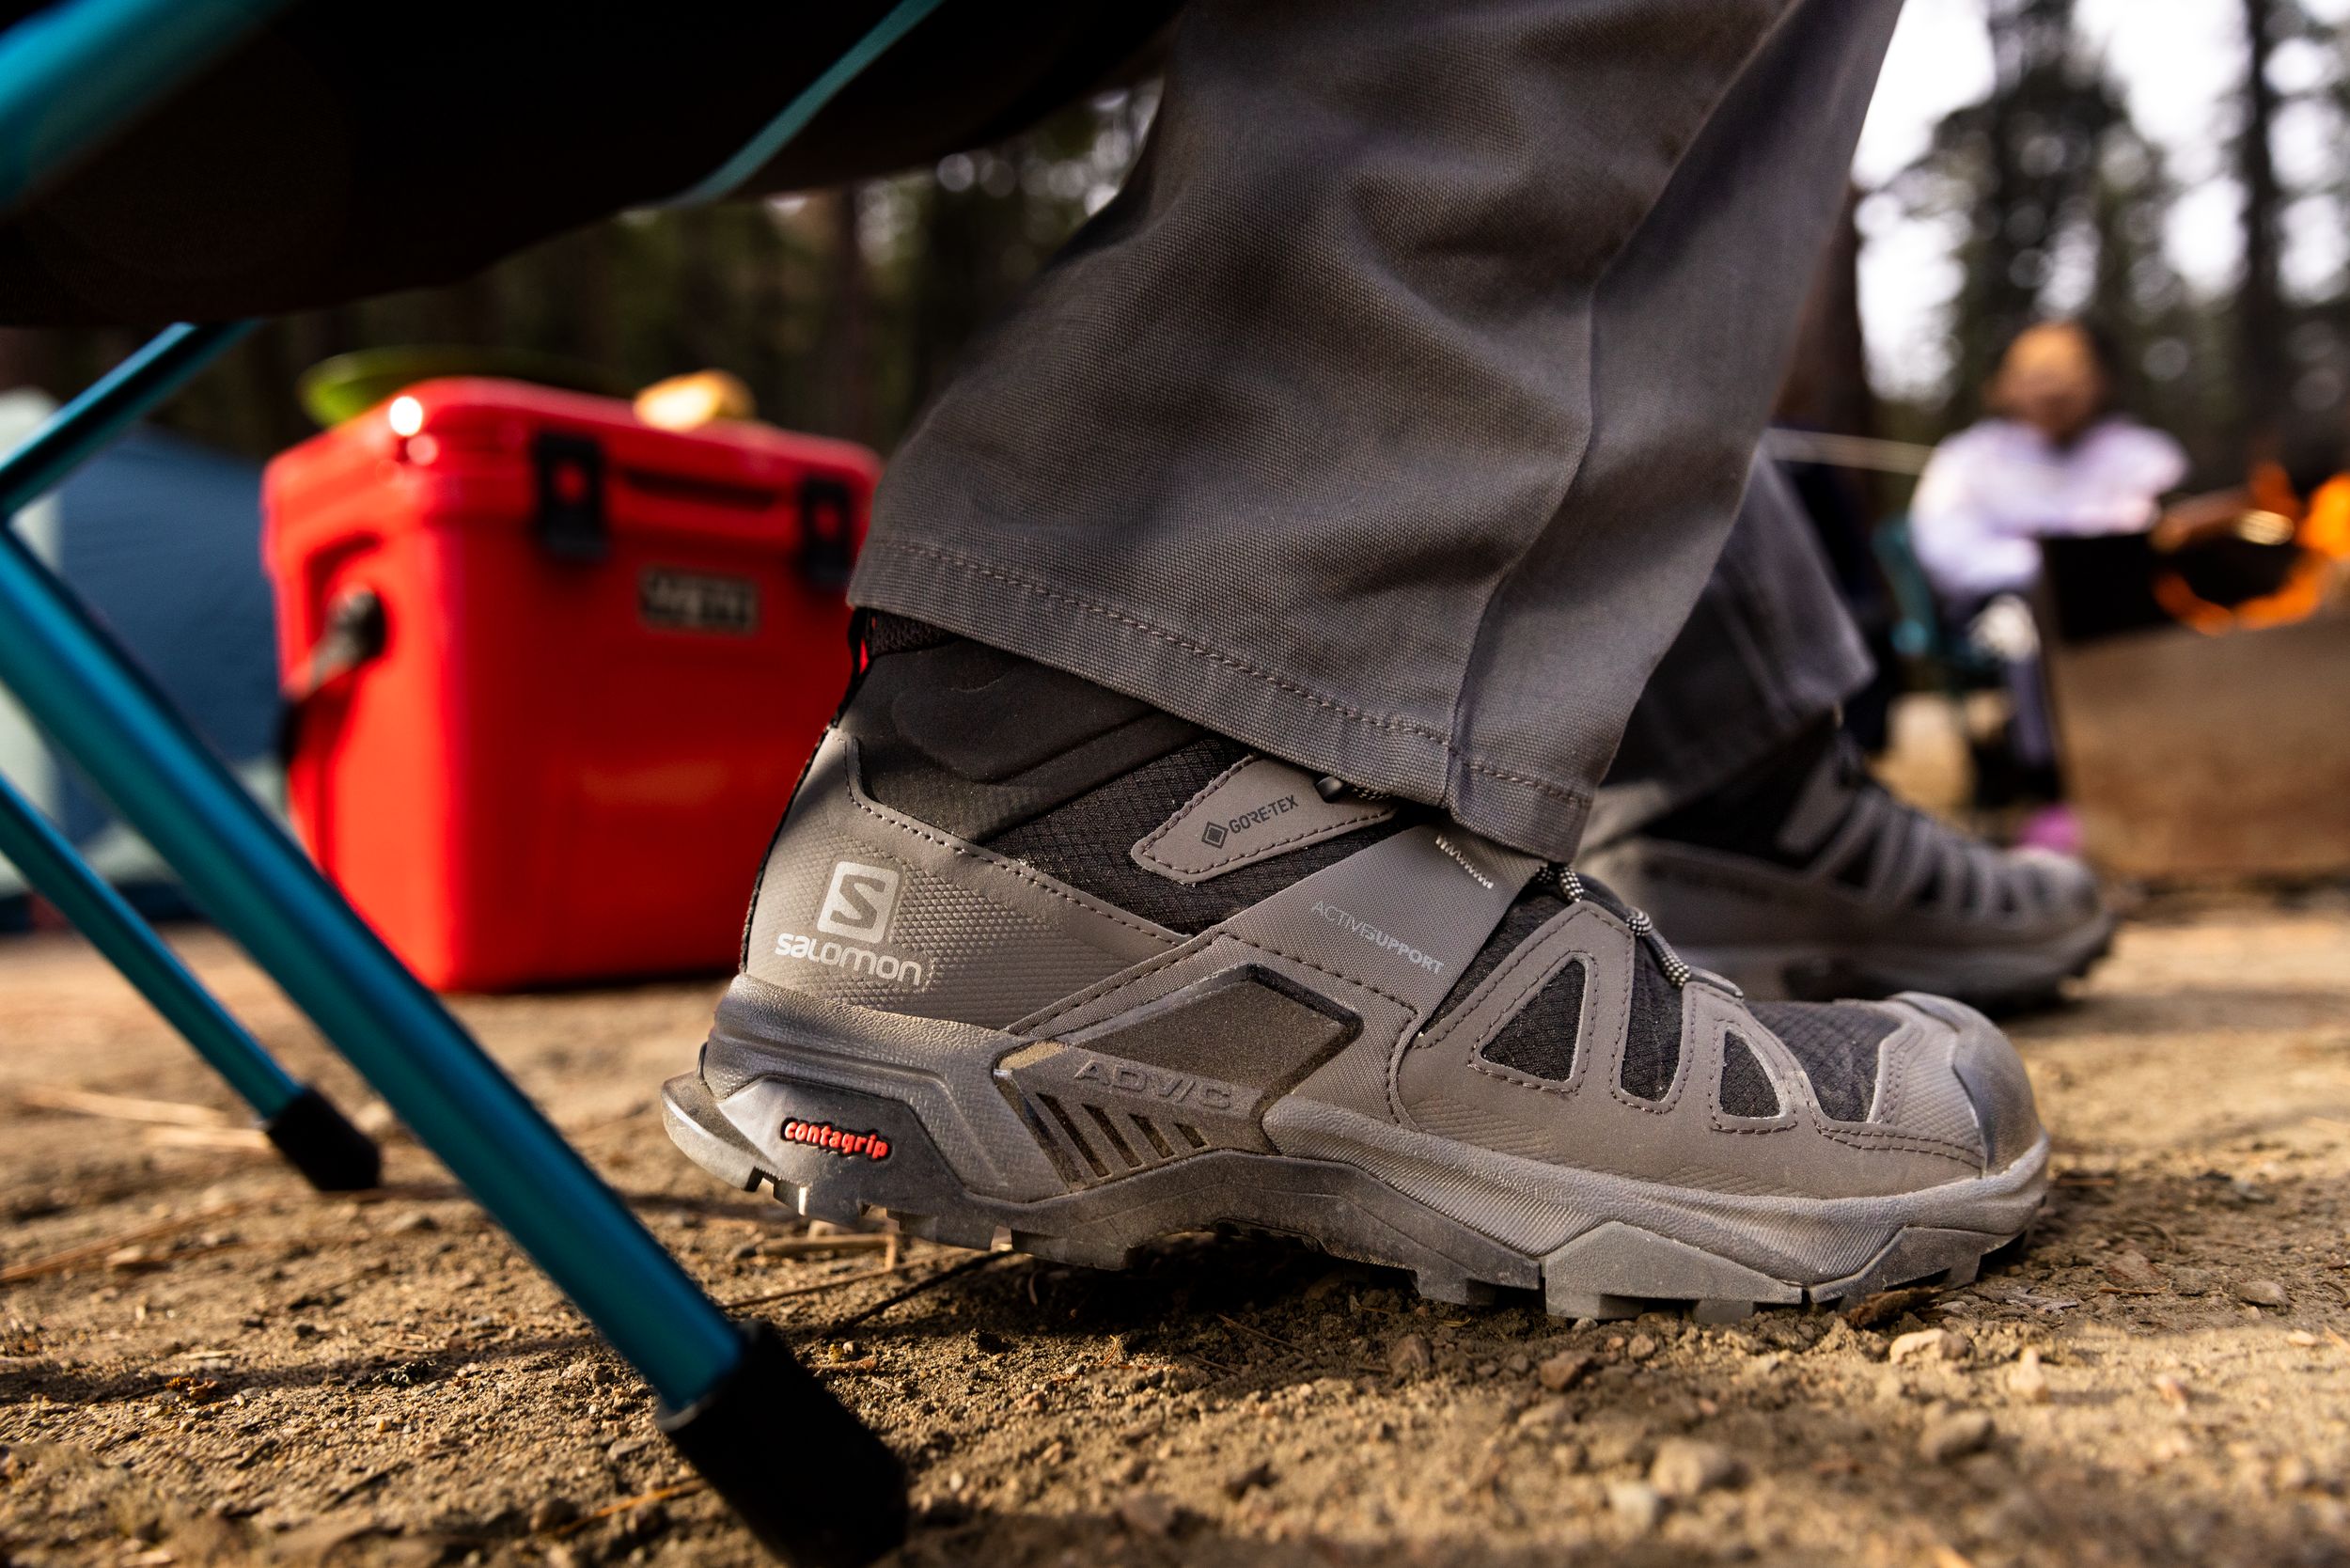 Salomon Men's Ultra 4 Hiking Shoes, Gore-Tex, Waterproof